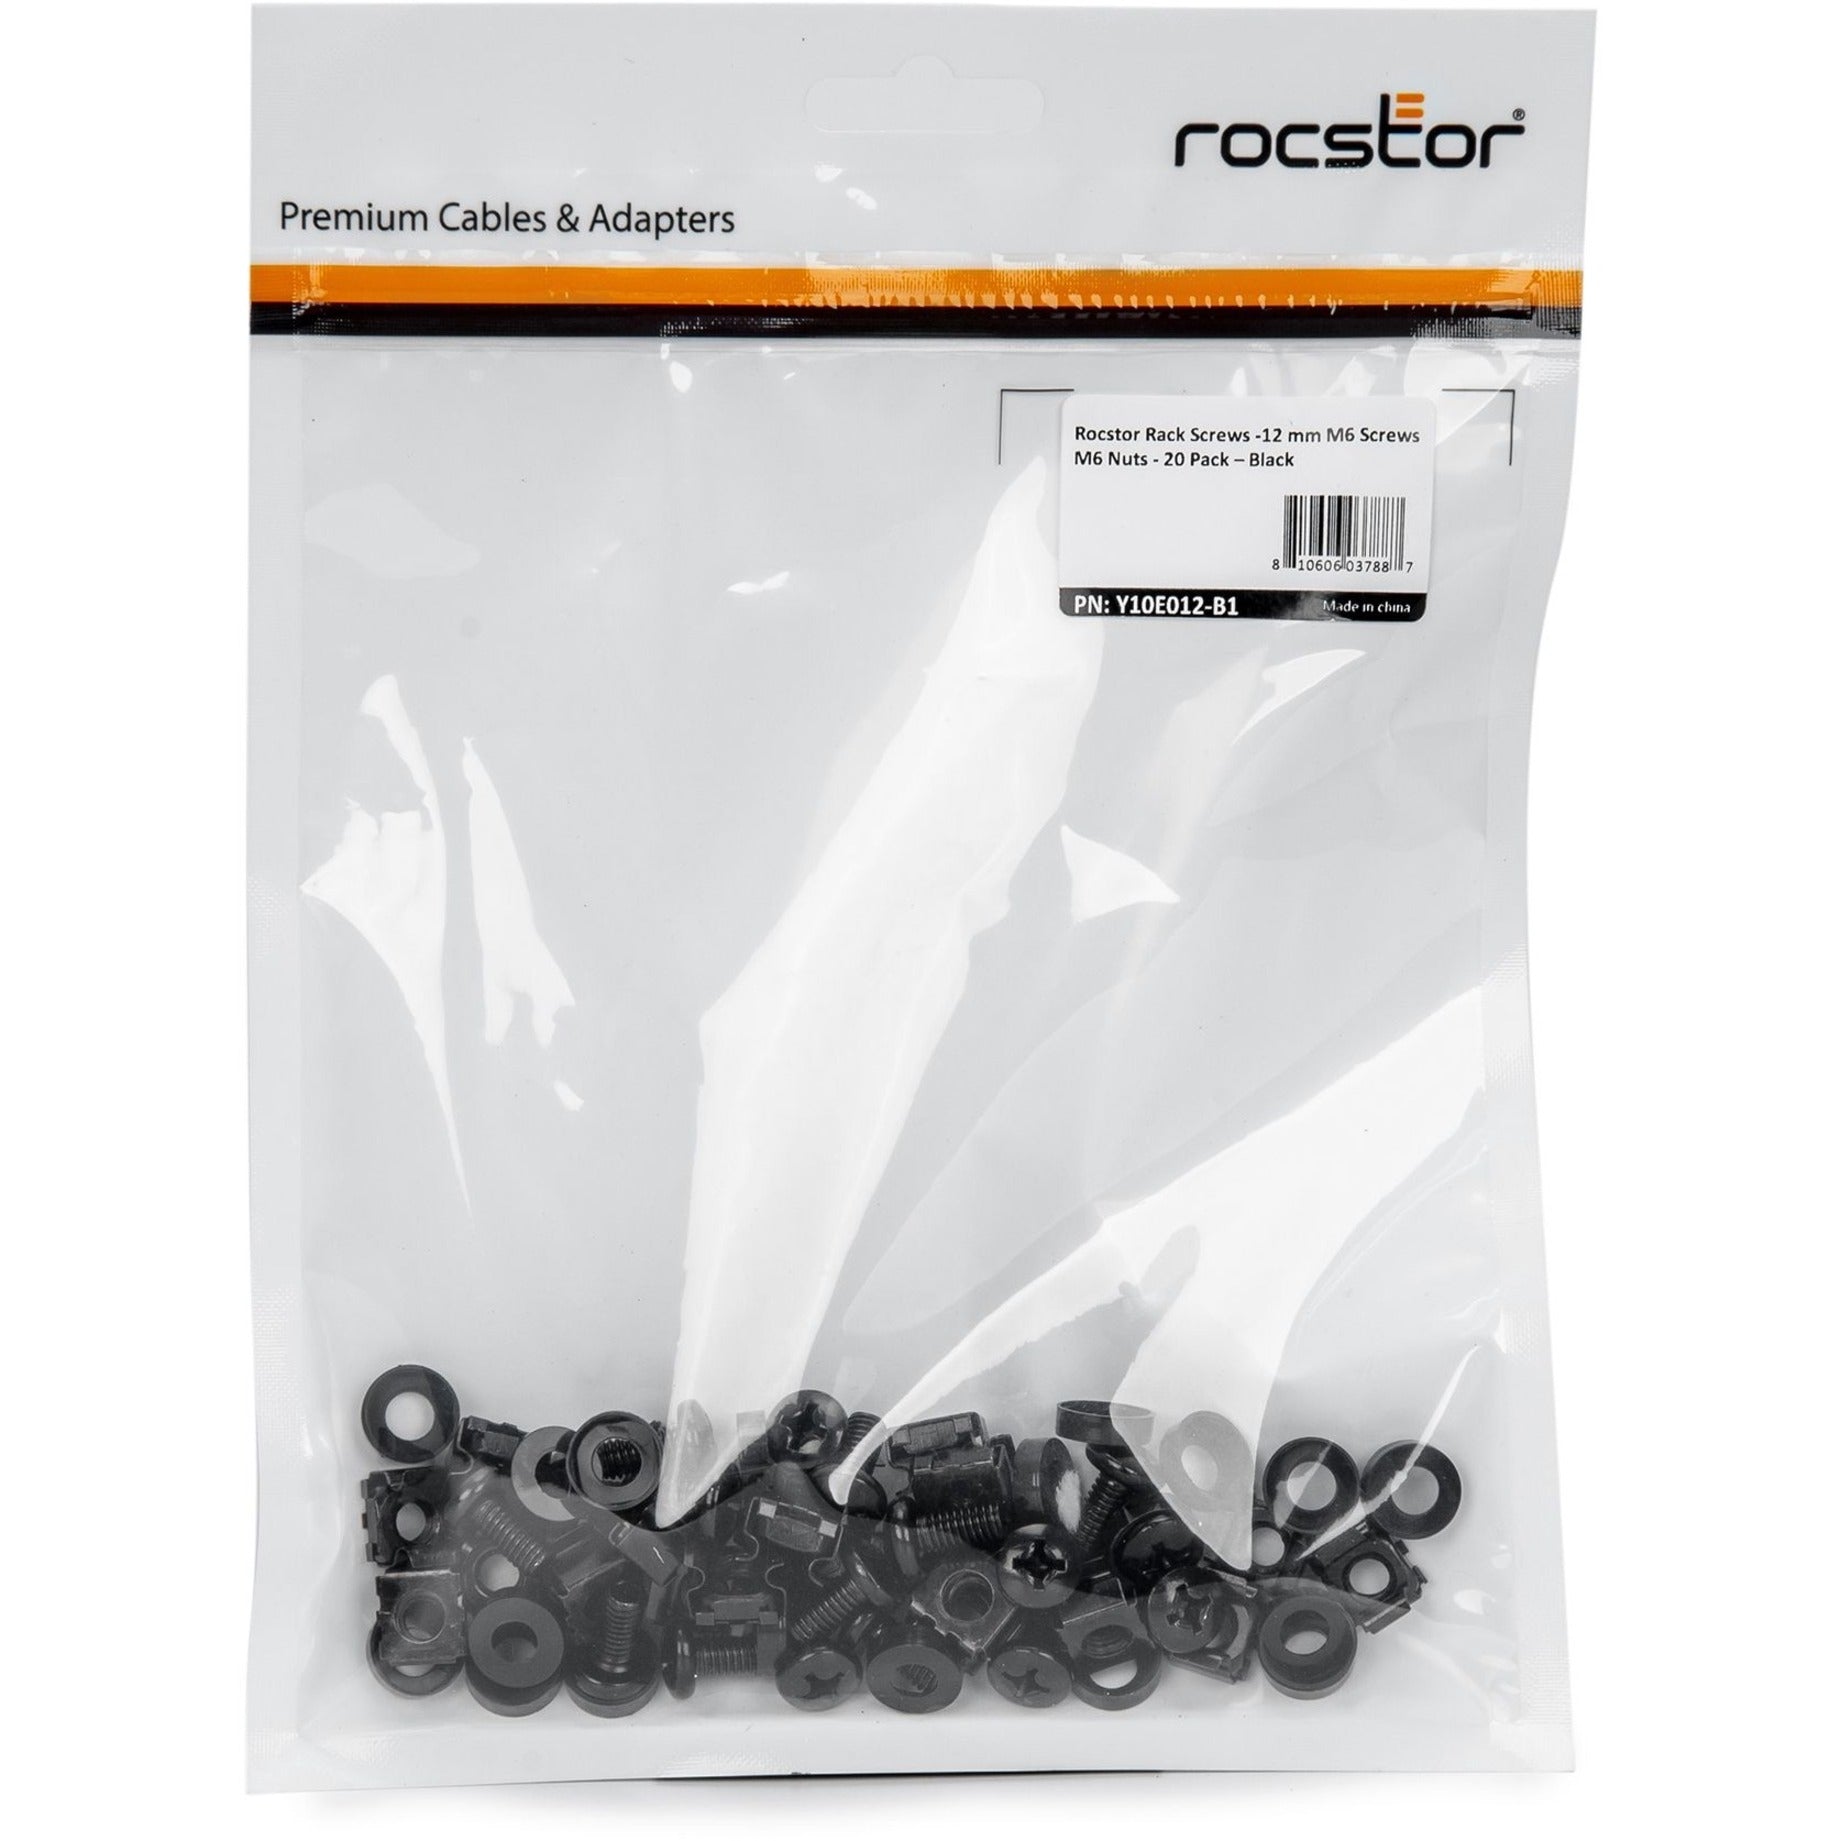 Rocstor Y10E012-B1 Screw, 20 Pack, Rust Resistant, Black